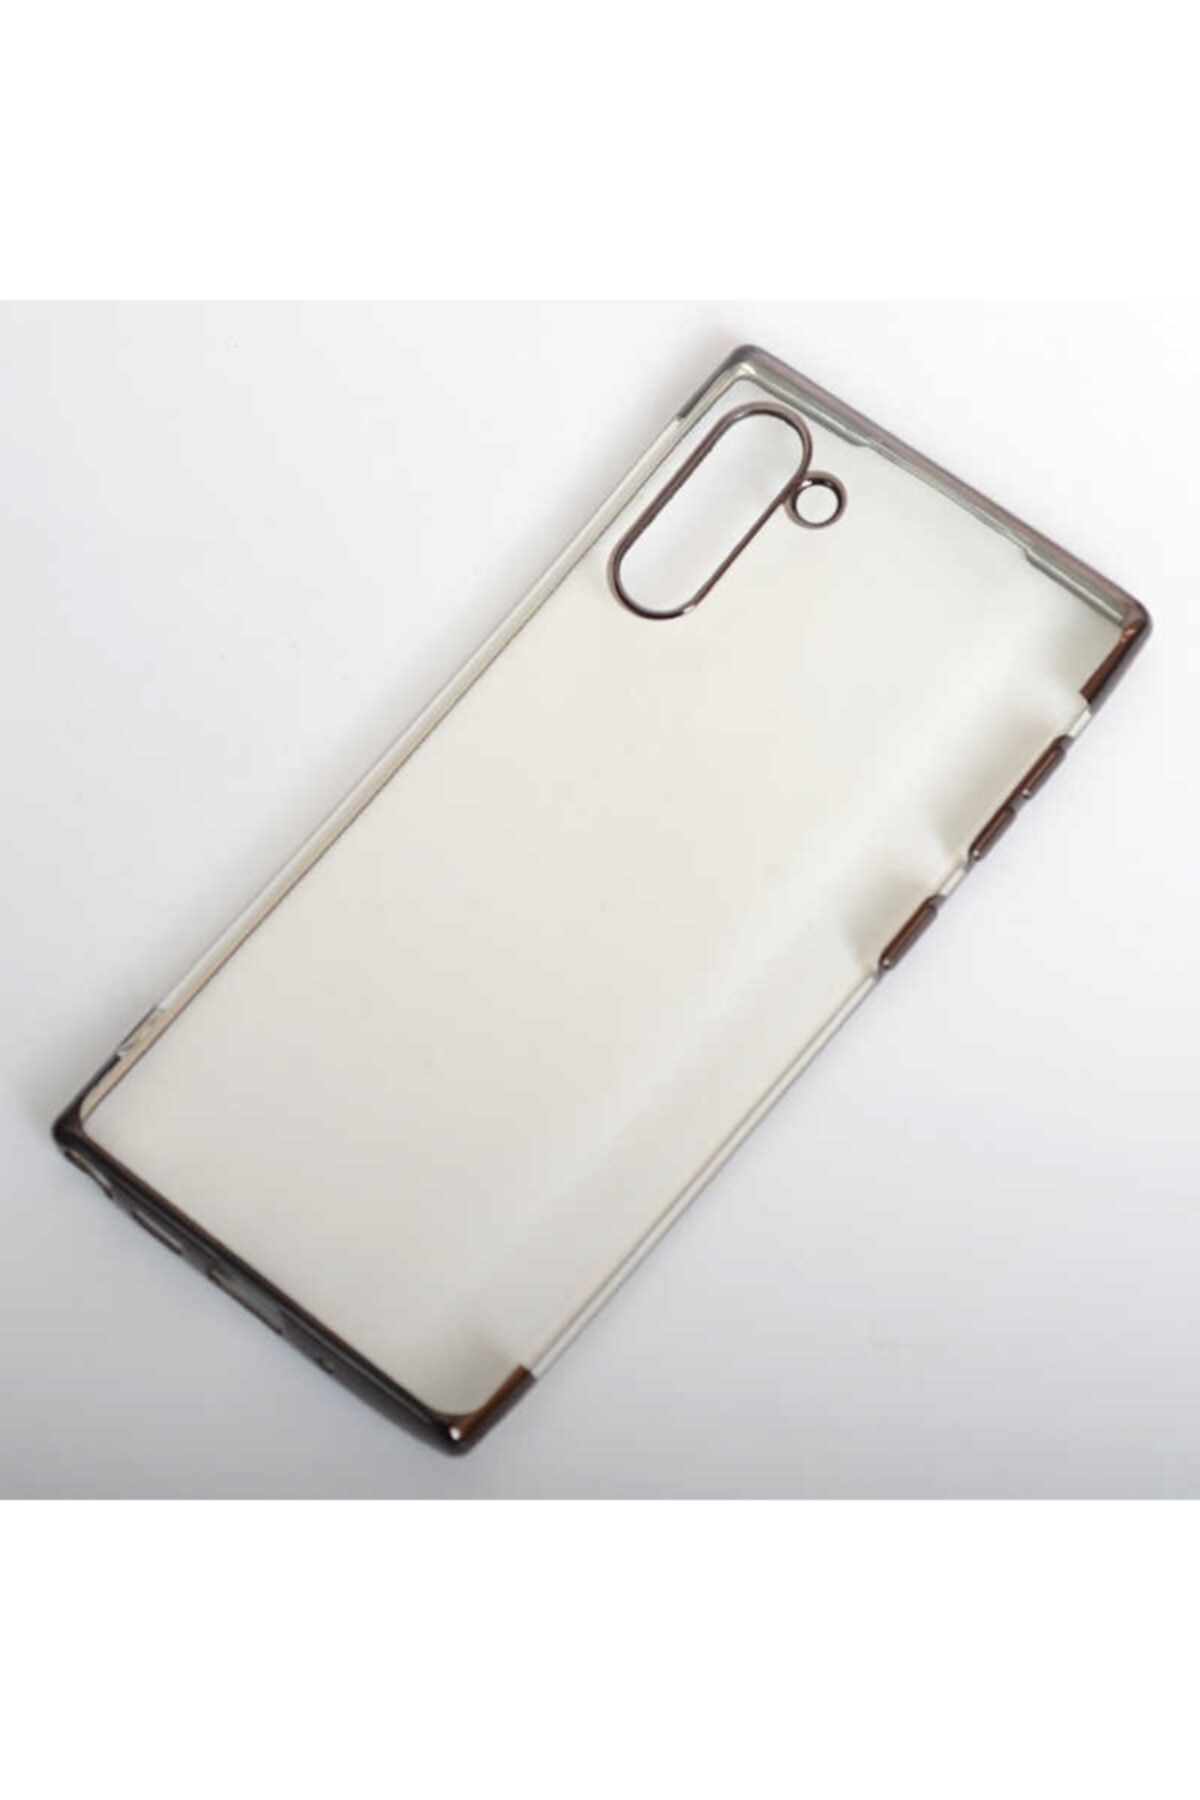 Fibaks Samsung Galaxy Note 10 Uyumlu Kılıf Dört Köşe Renkli Şeffaf Silikon